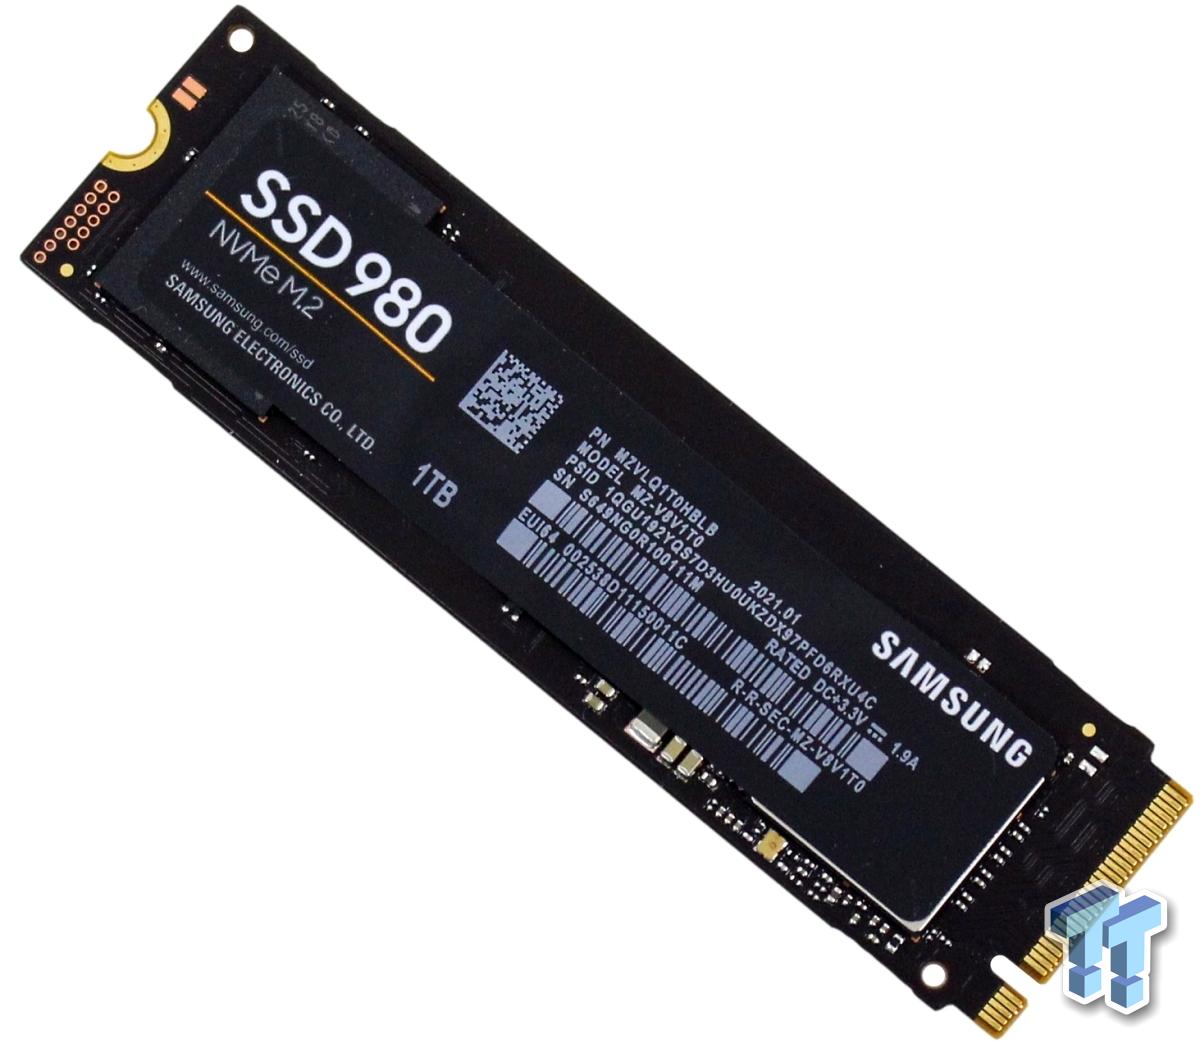 Samsung 980 1TB M.2 SSD Review